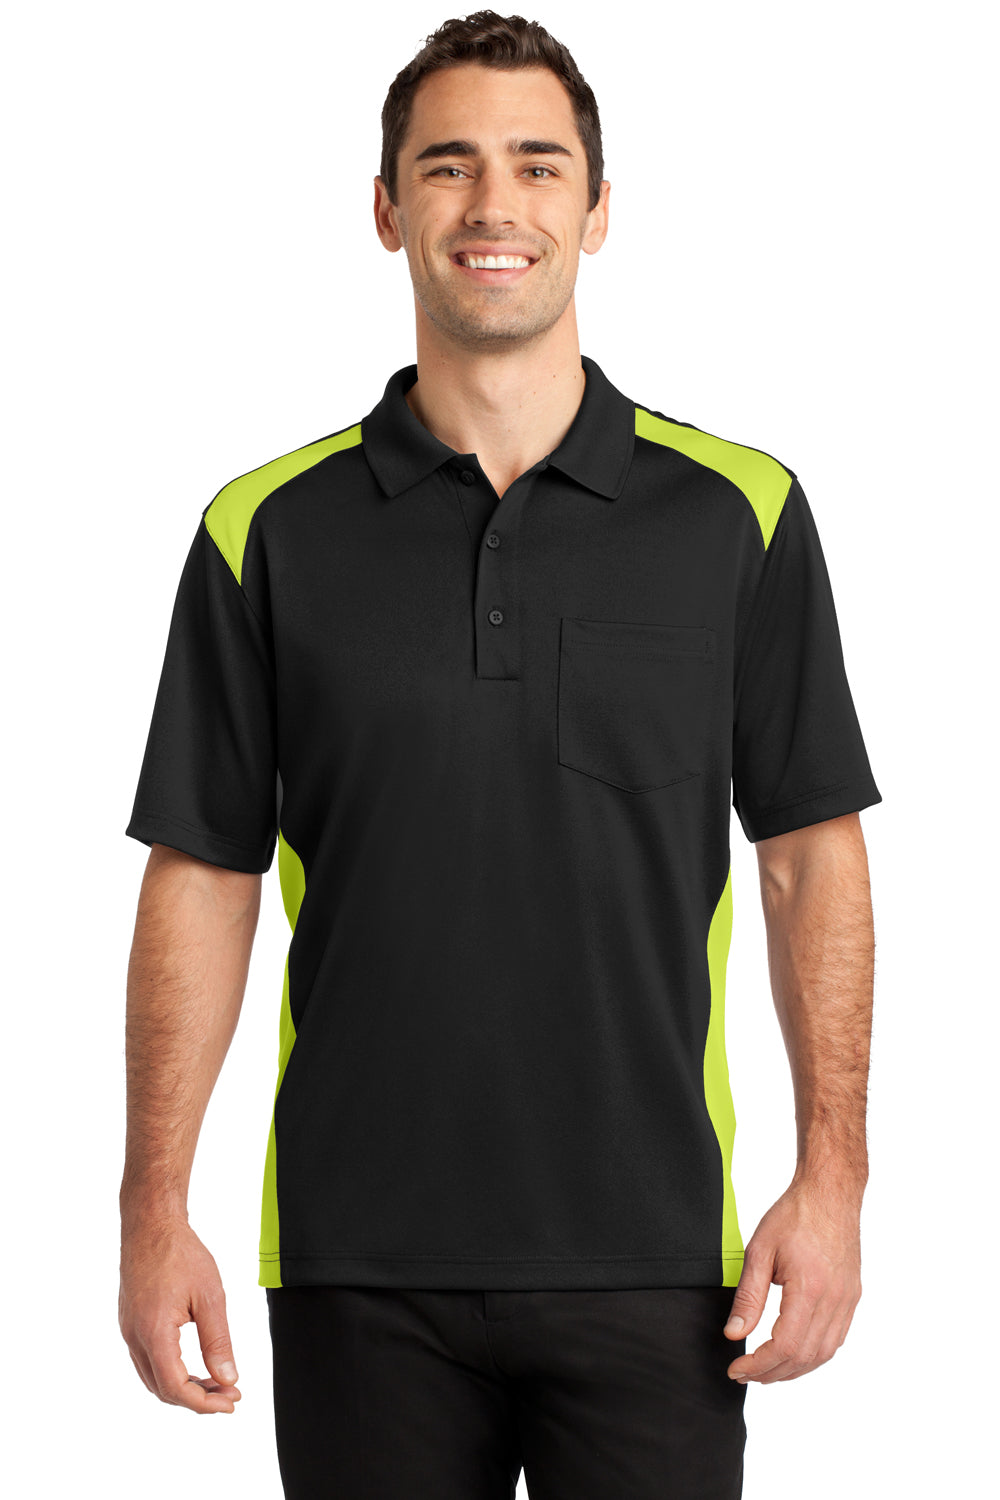 CornerStone CS416 Mens Select Moisture Wicking Short Sleeve Polo Shirt w/ Pocket Black/Neon Green Front